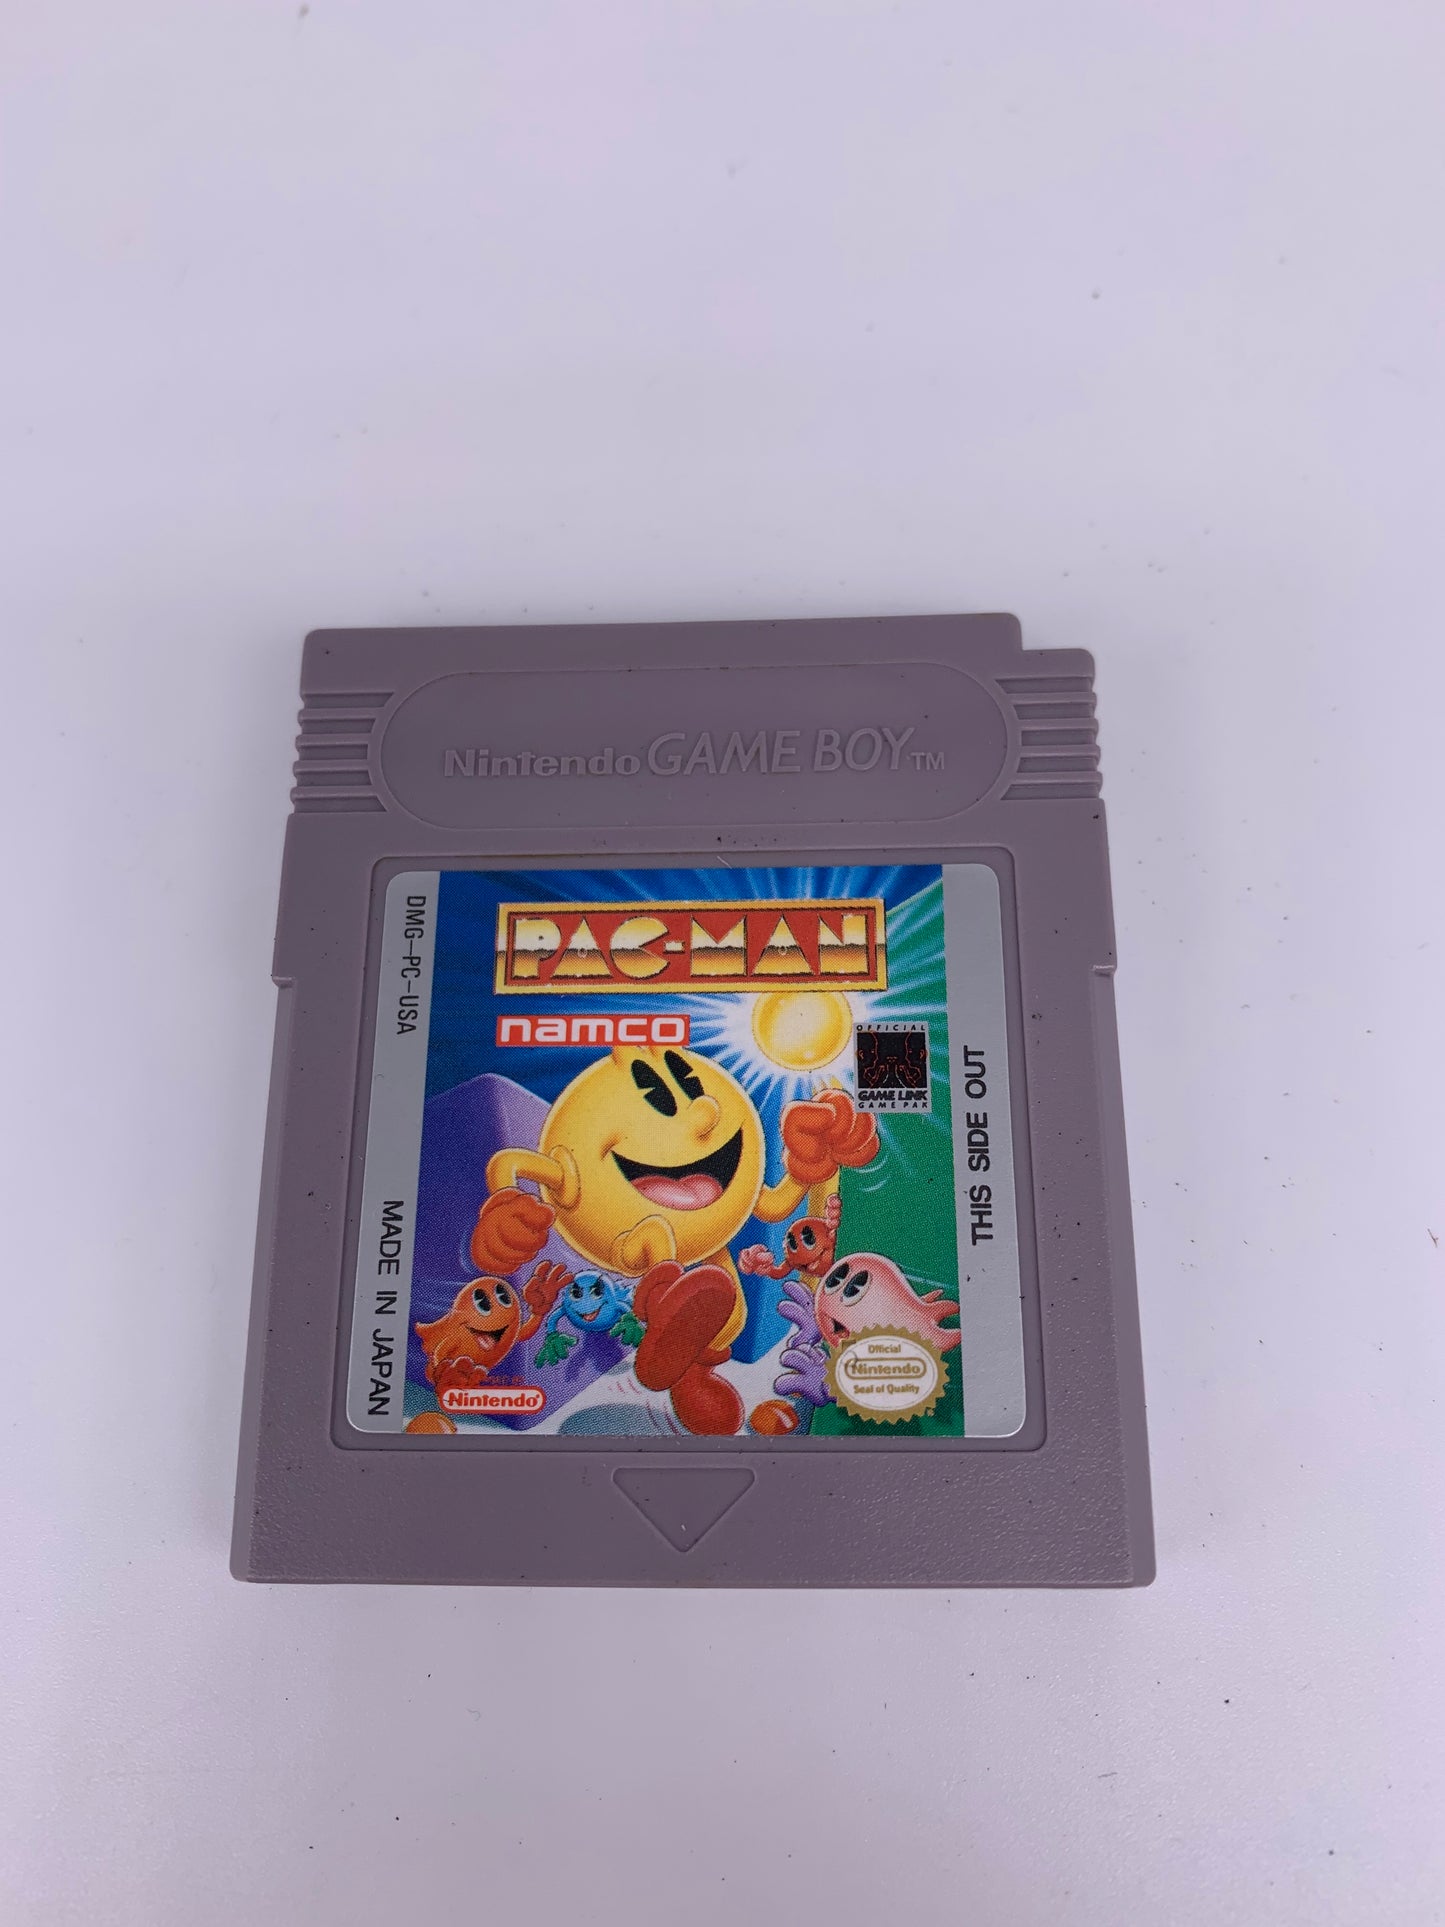 PiXEL-RETRO.COM : GAME BOY GAMEBOY (GB) GAME NTSC PAC-MAN